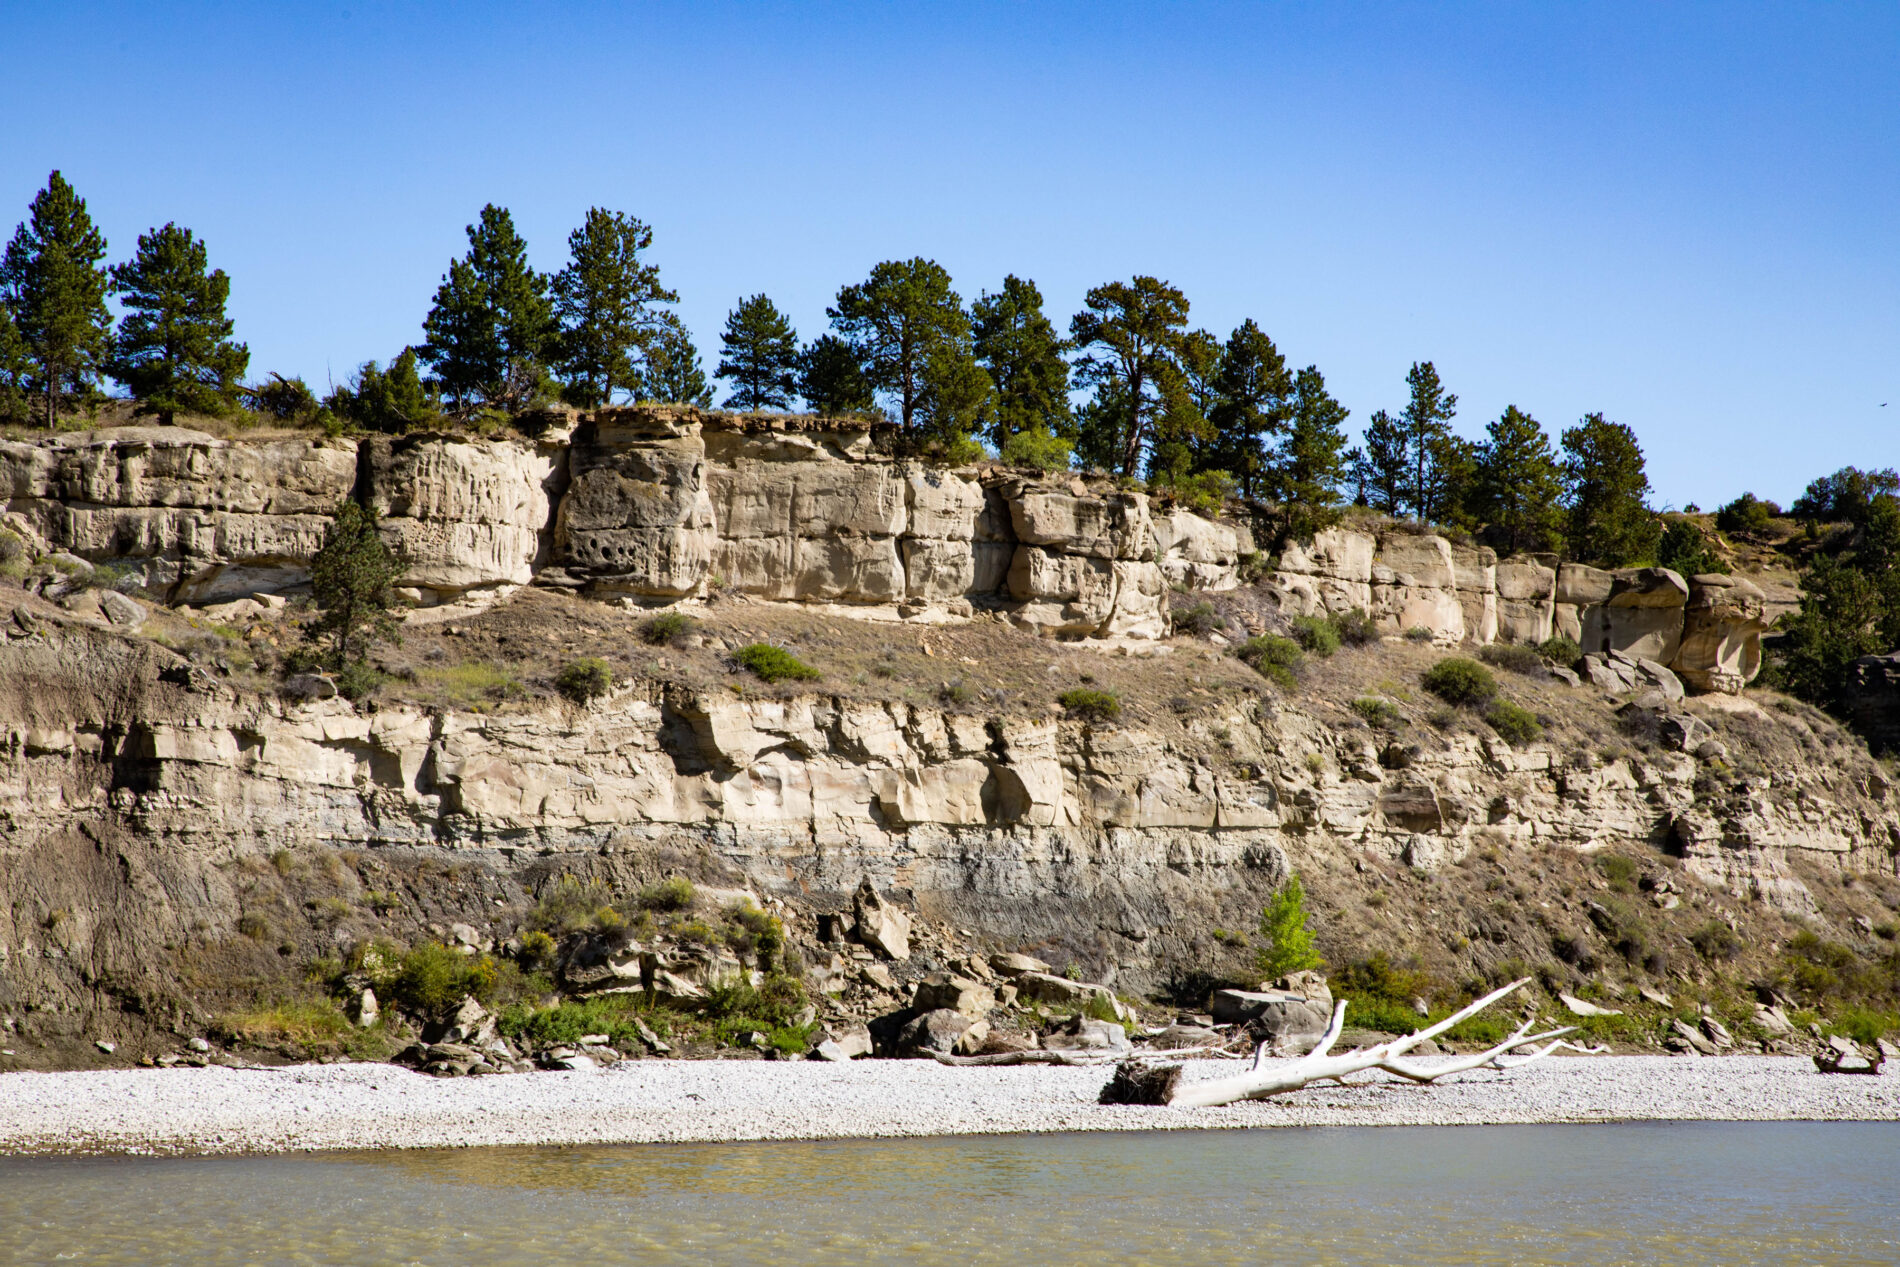 Yellowstone River runs adjacent to the Pompeys Pillar Park.